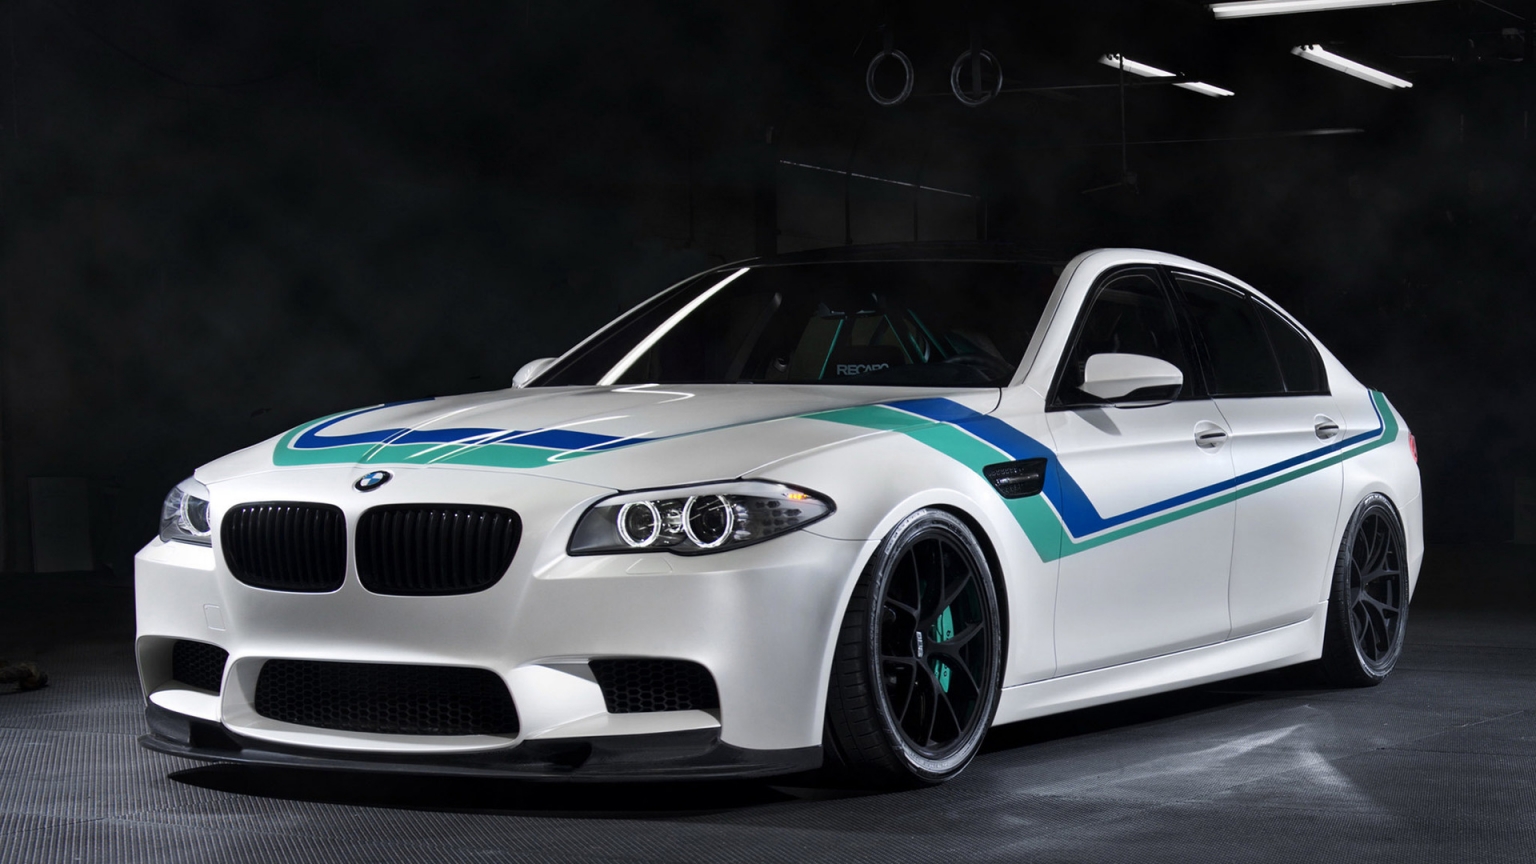 BMW F10 M Performance for 1536 x 864 HDTV resolution